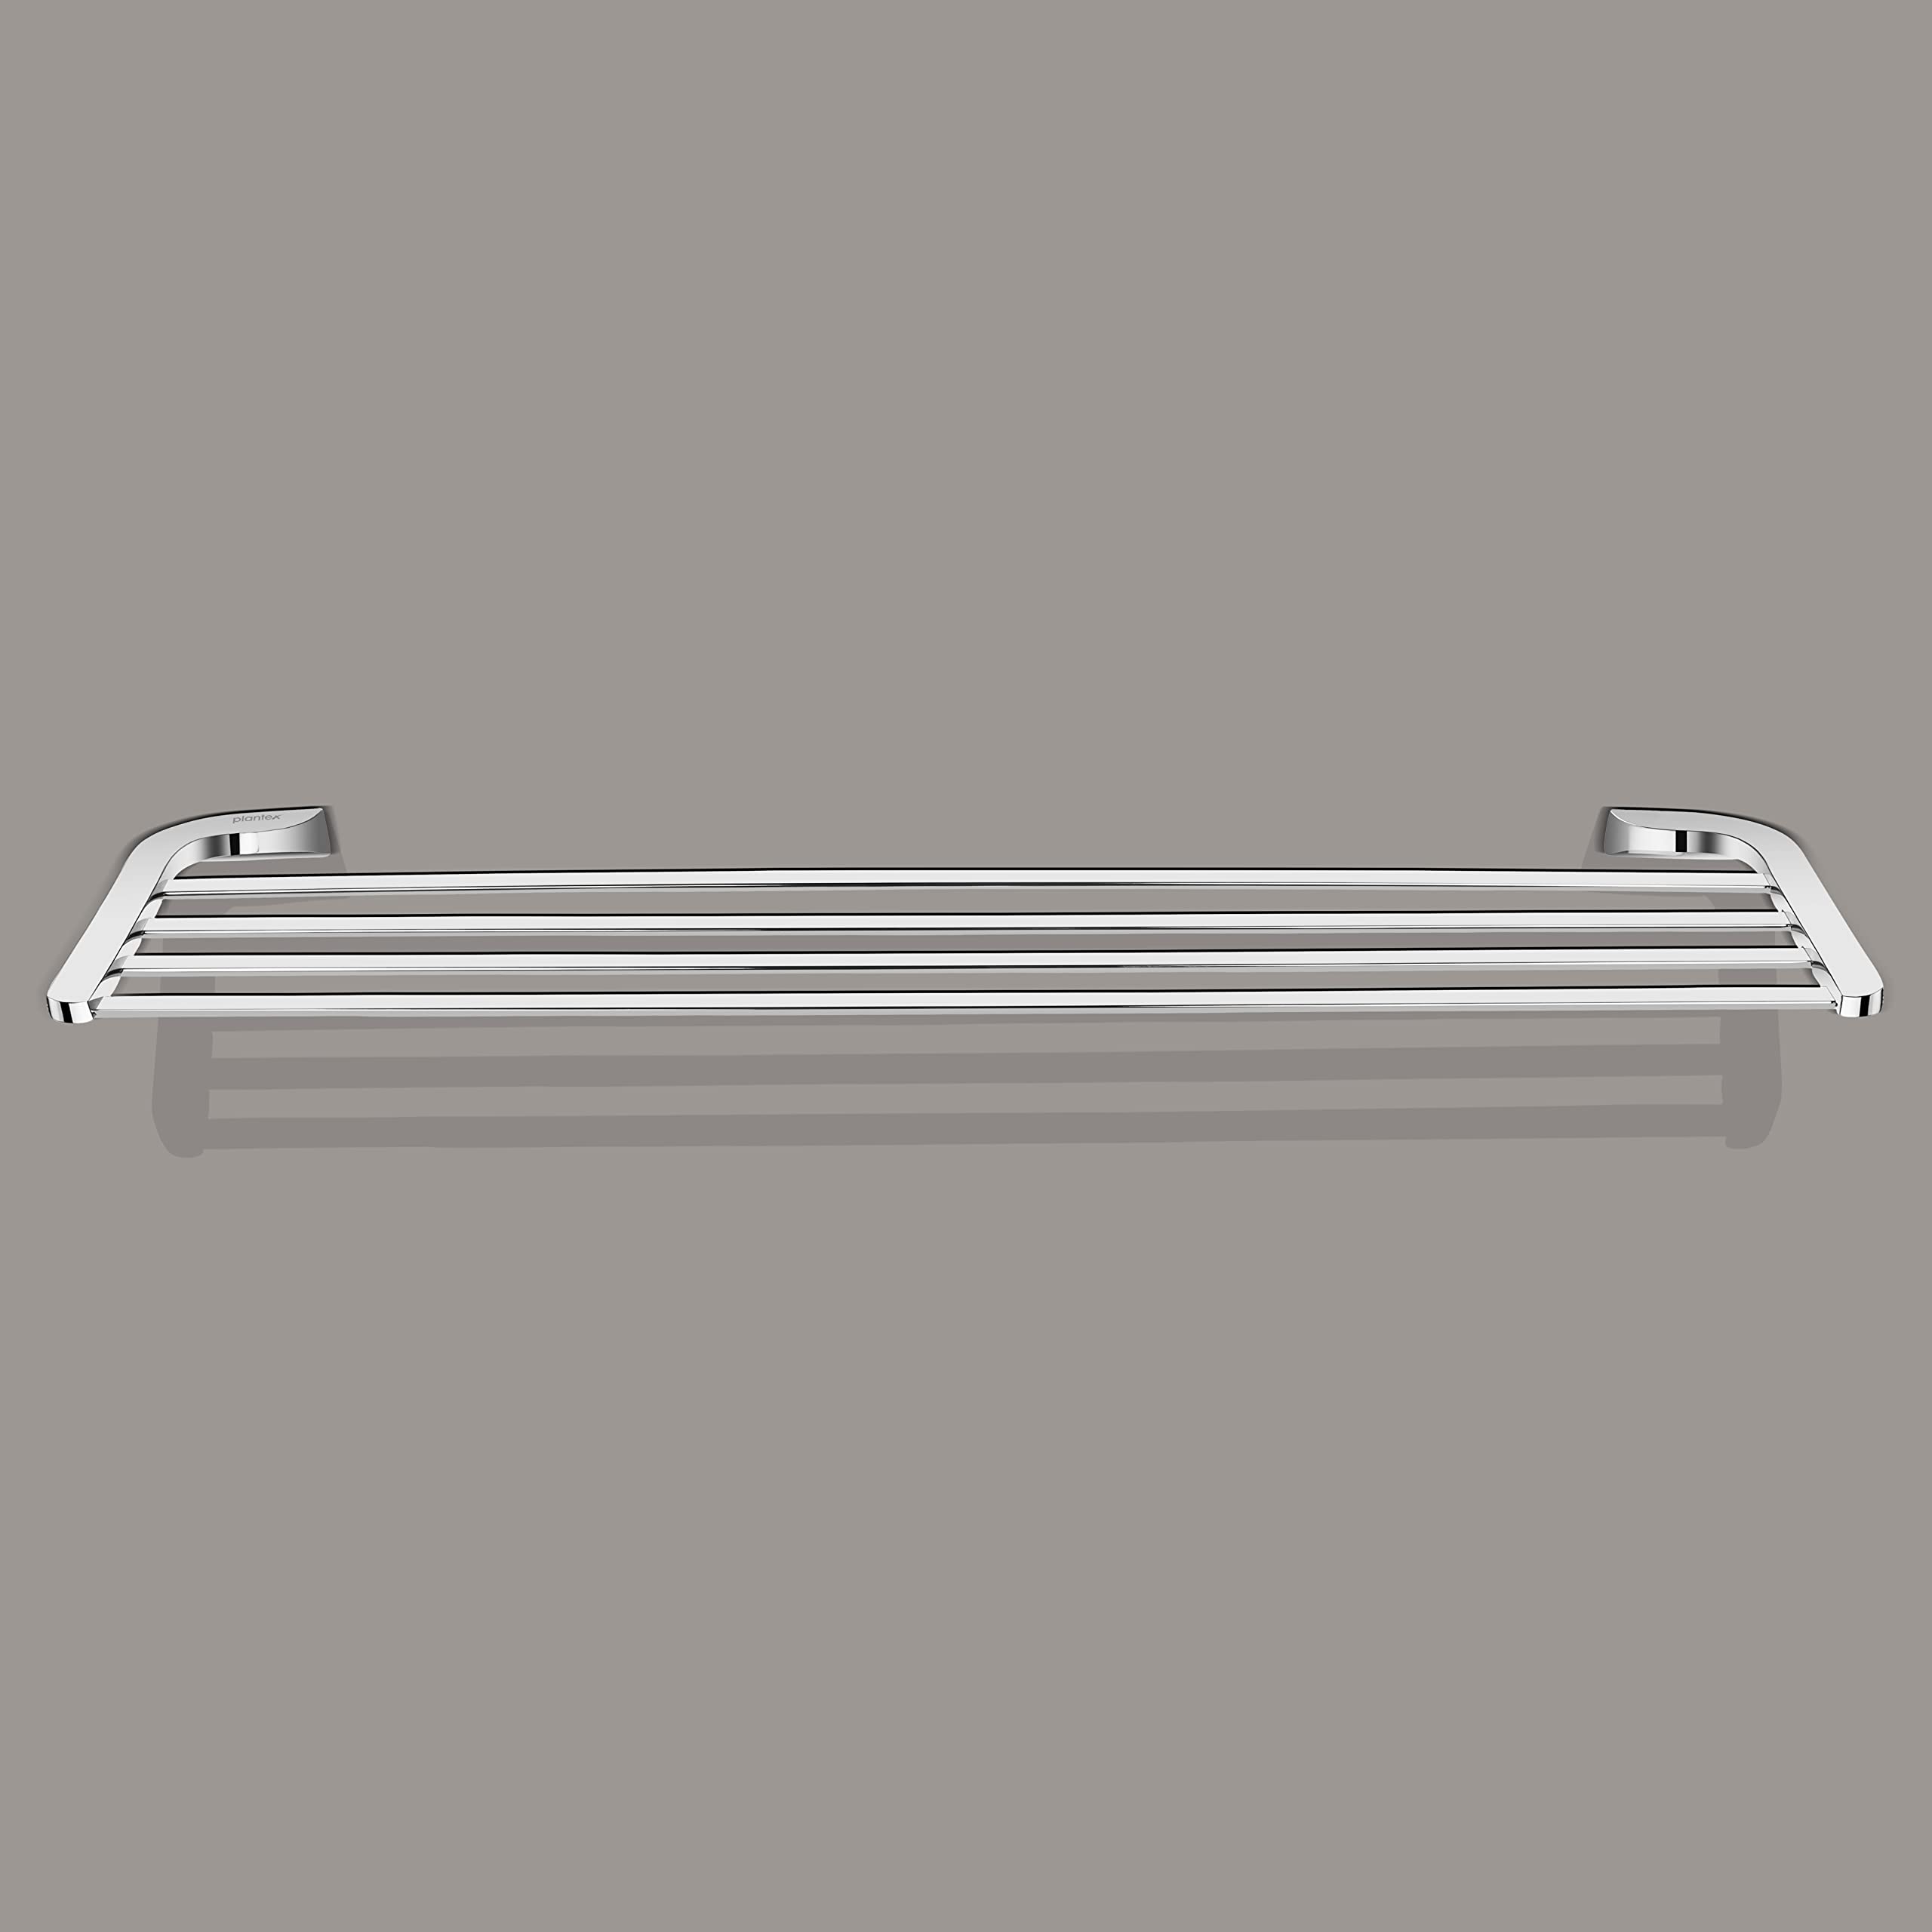 Plantex Fully Brass Smero Towel Rack/Towel Stand/Hanger/Holder Bathroom Accessories - 24 Inch,Chrome (AQ-8131)